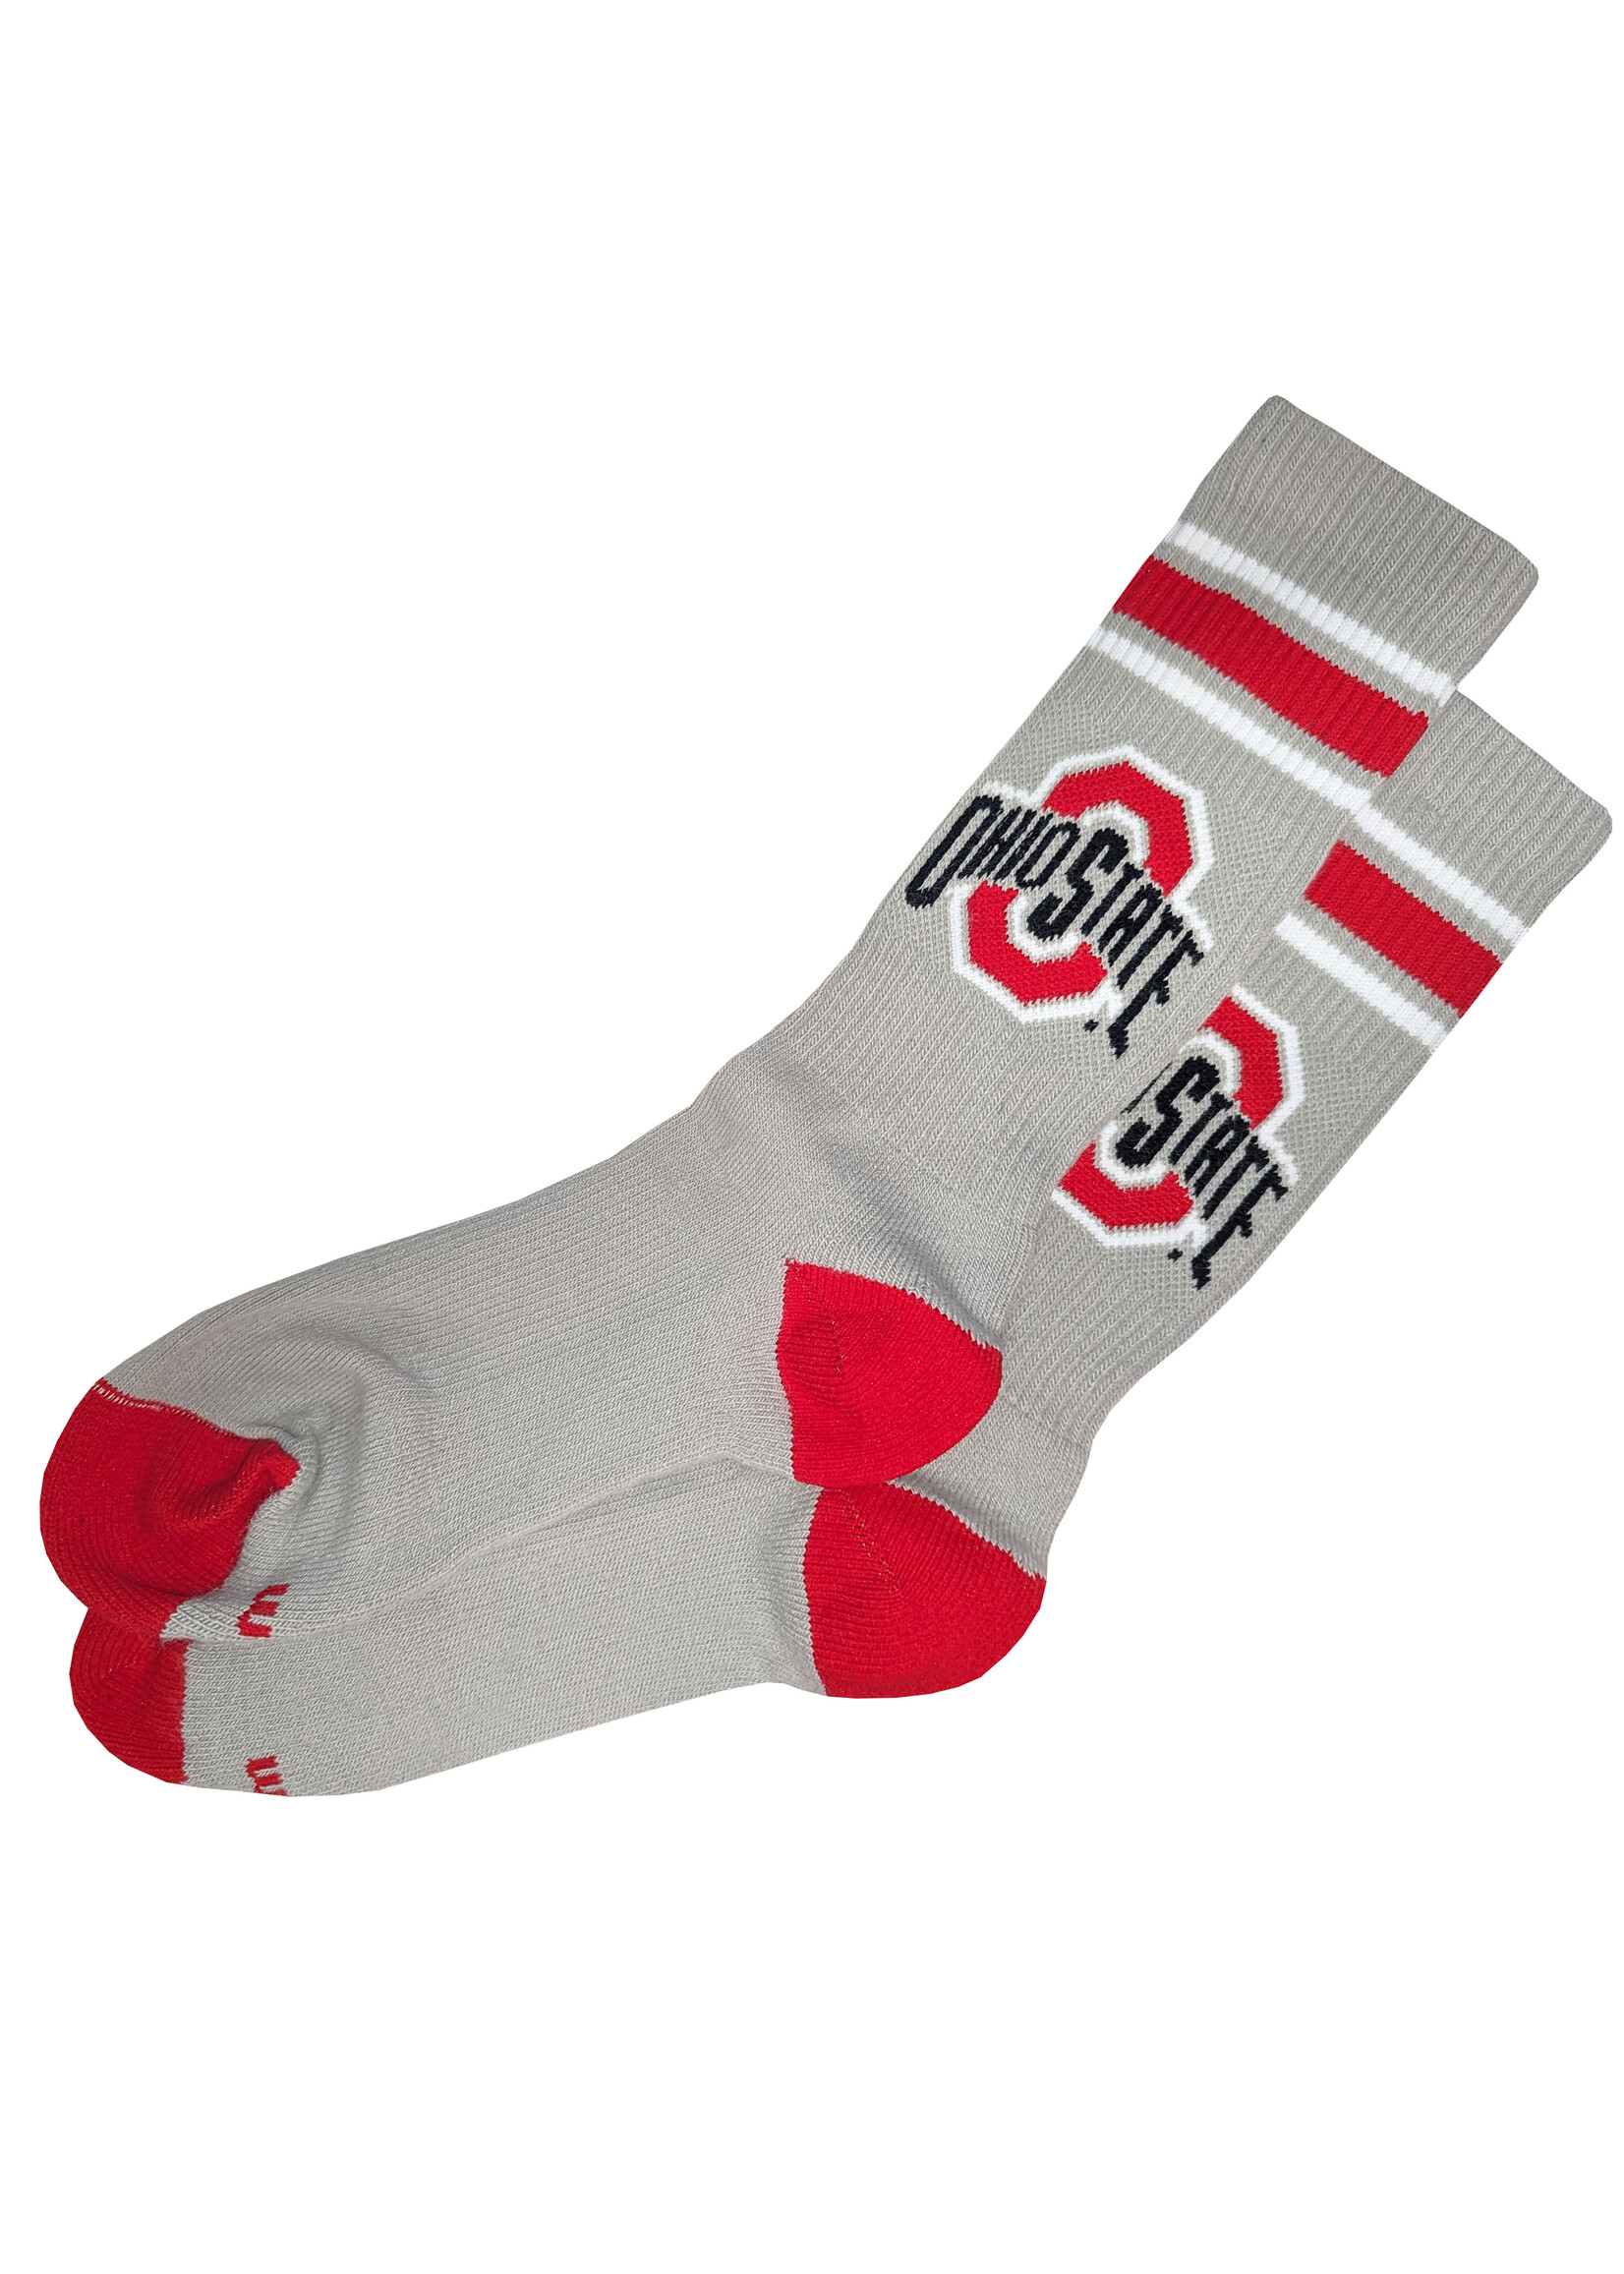 TCK Ohio State Buckeyes Gray & Red Striped Crew Socks